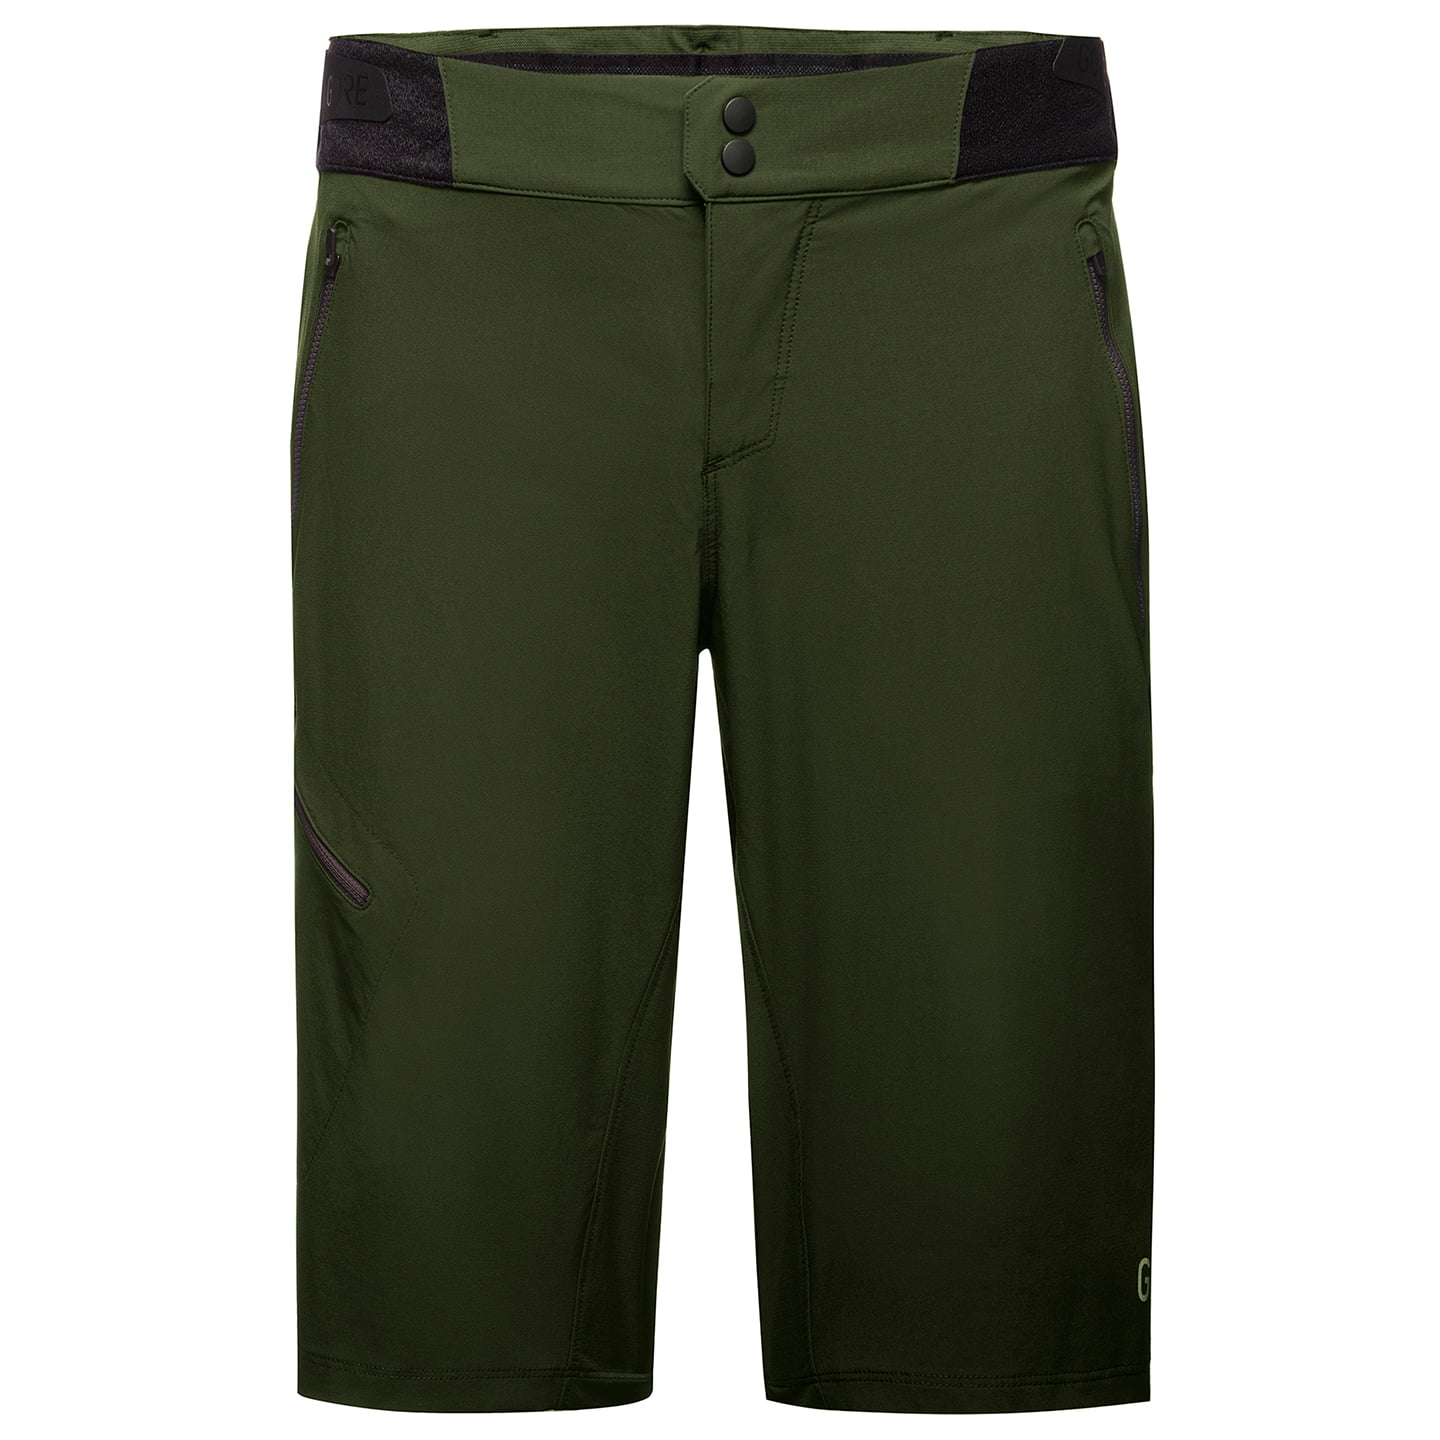 GORE WEAR C5 w/o Pad Bike Shorts, for men, size XL, MTB shorts, MTB clothing